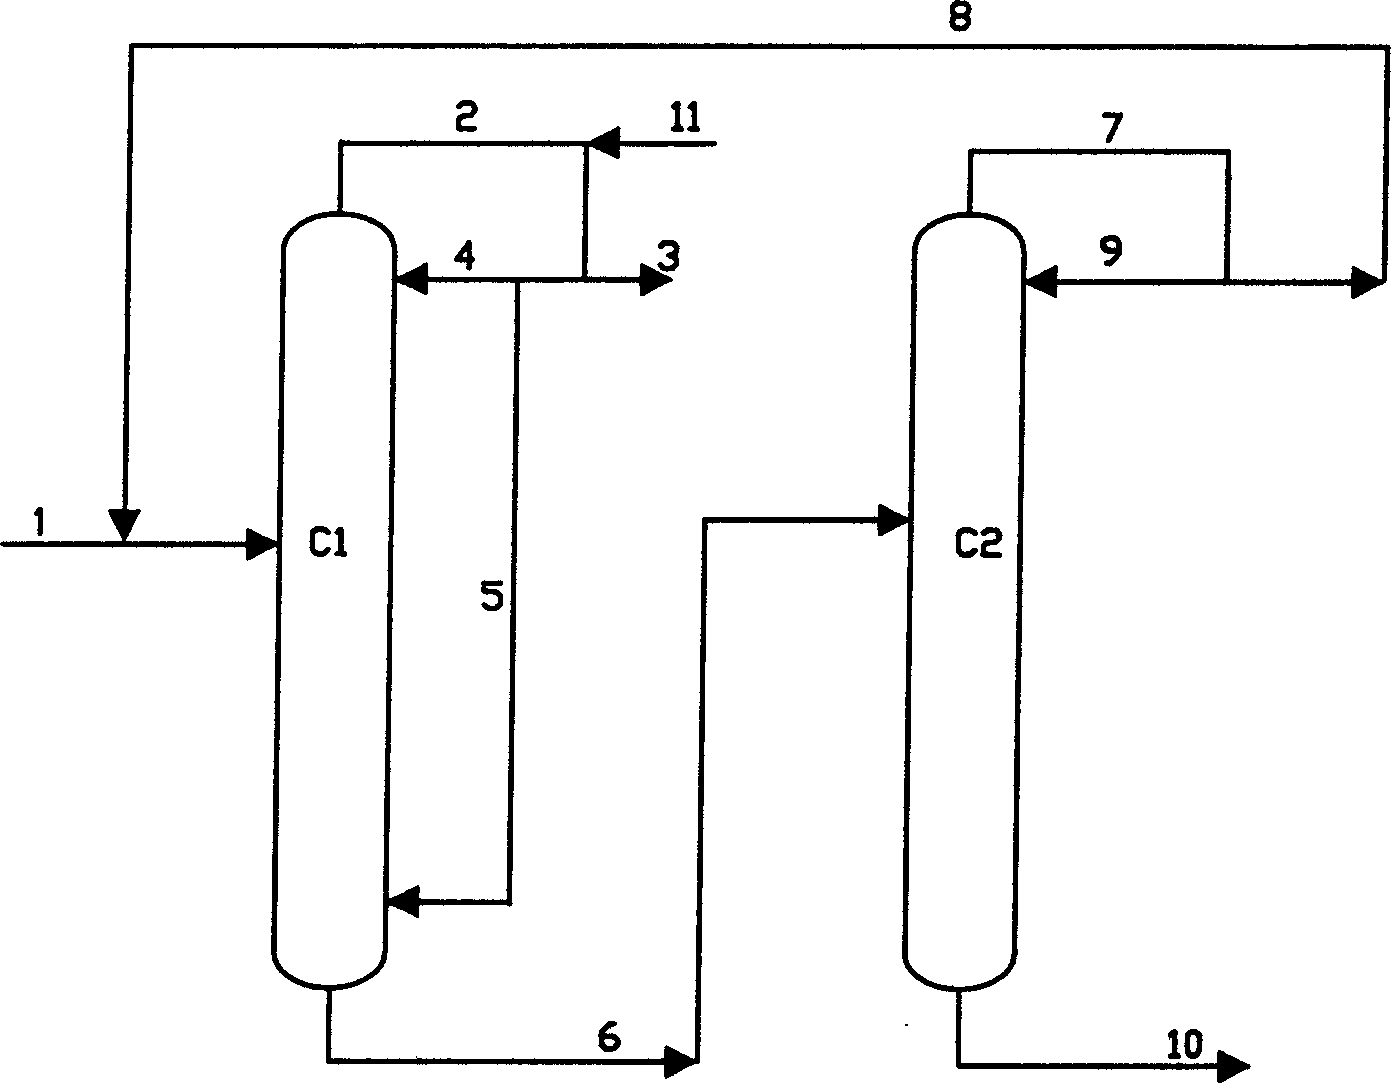 Method for purifying acrylic acid b utilizing azeotropic rectification